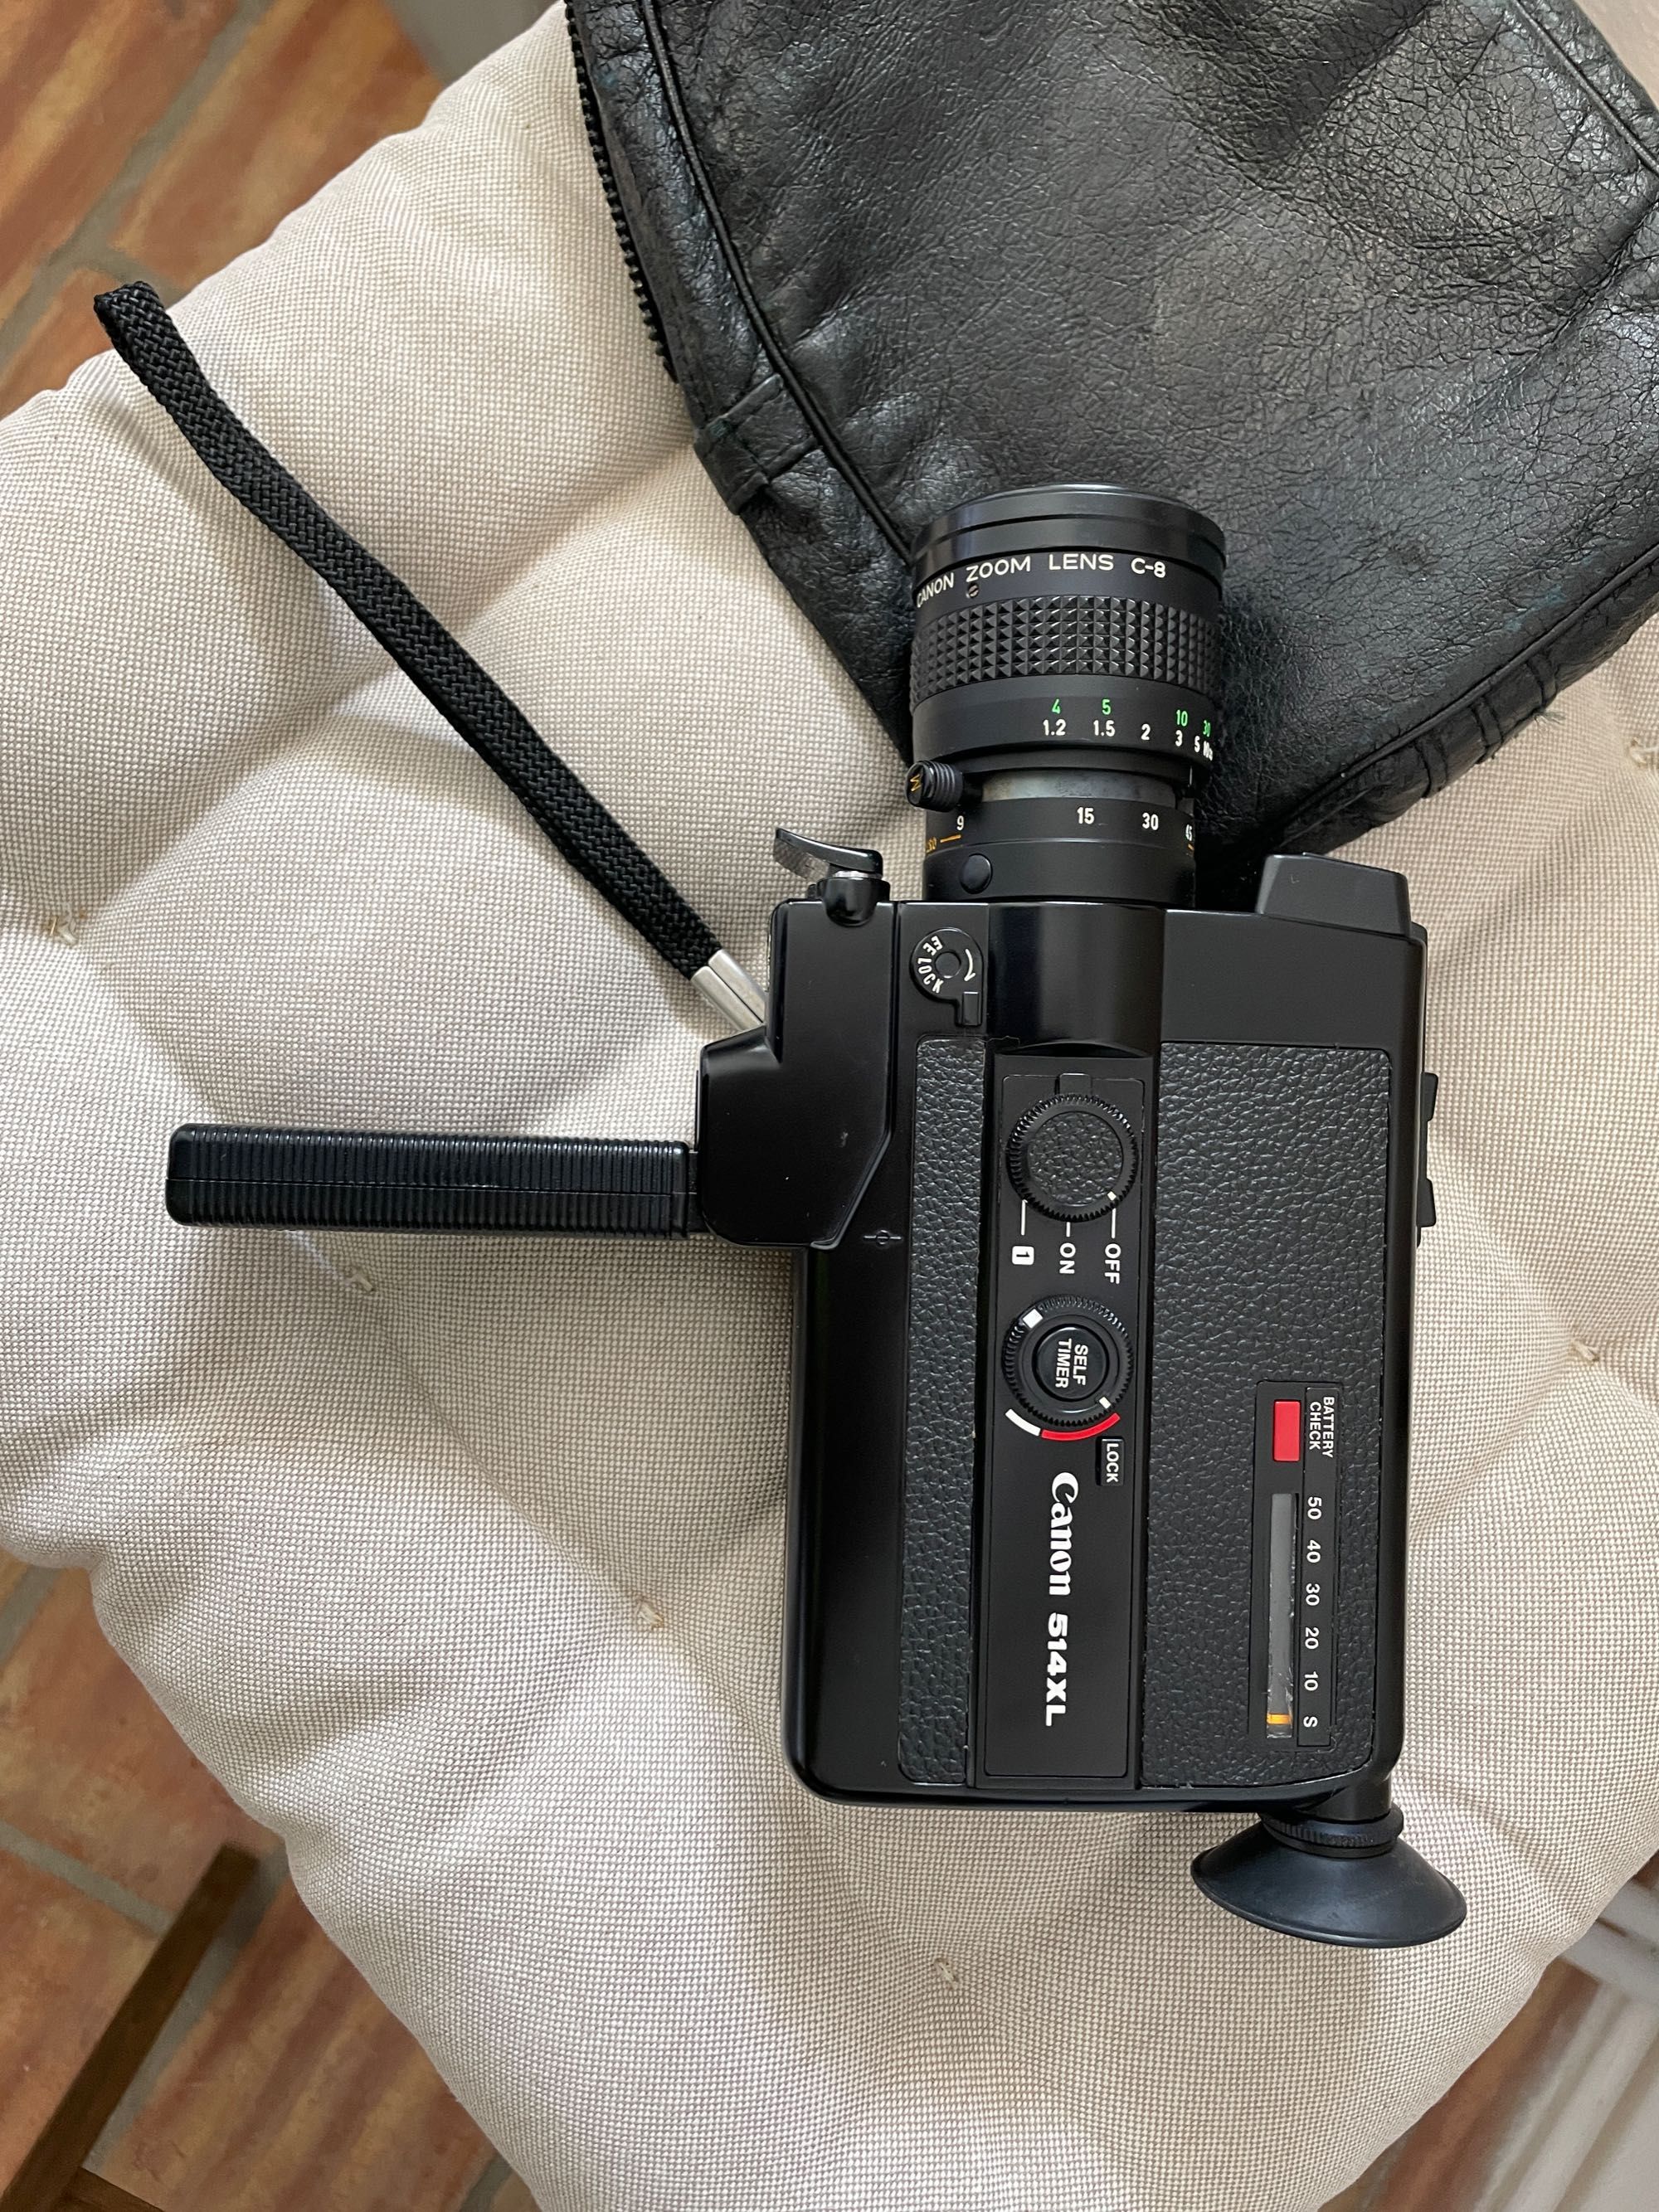 Câmera Super 8 Canon 514XL